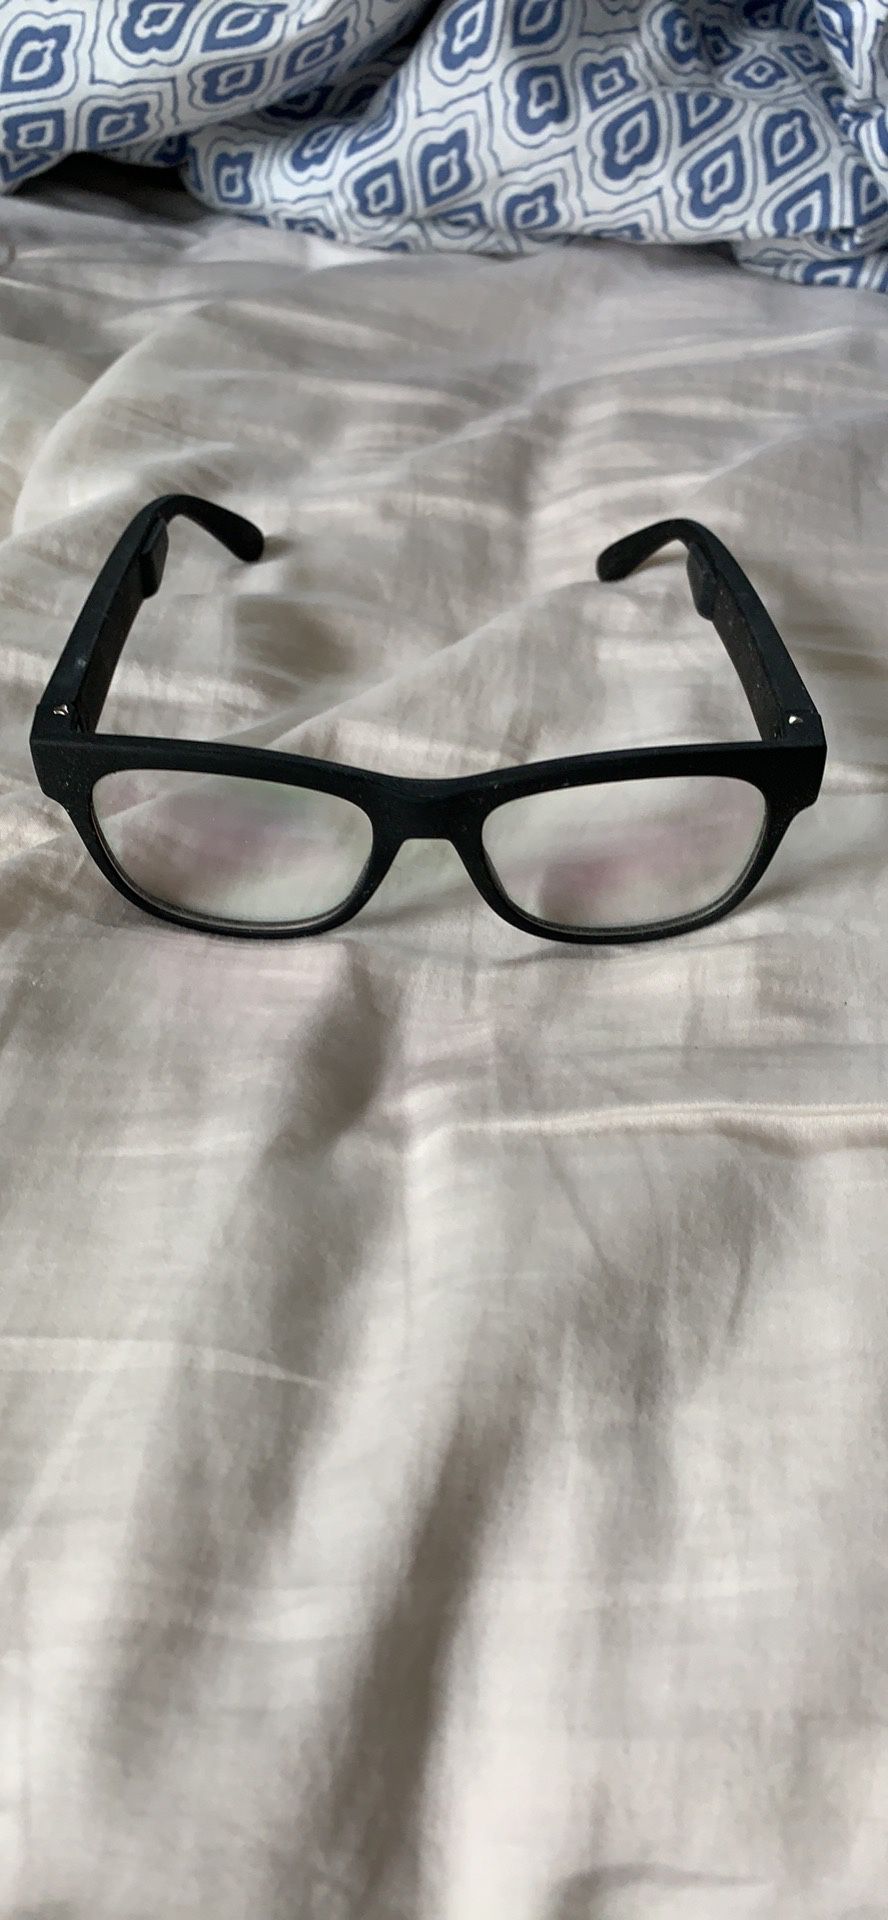 Bluetooth glasses